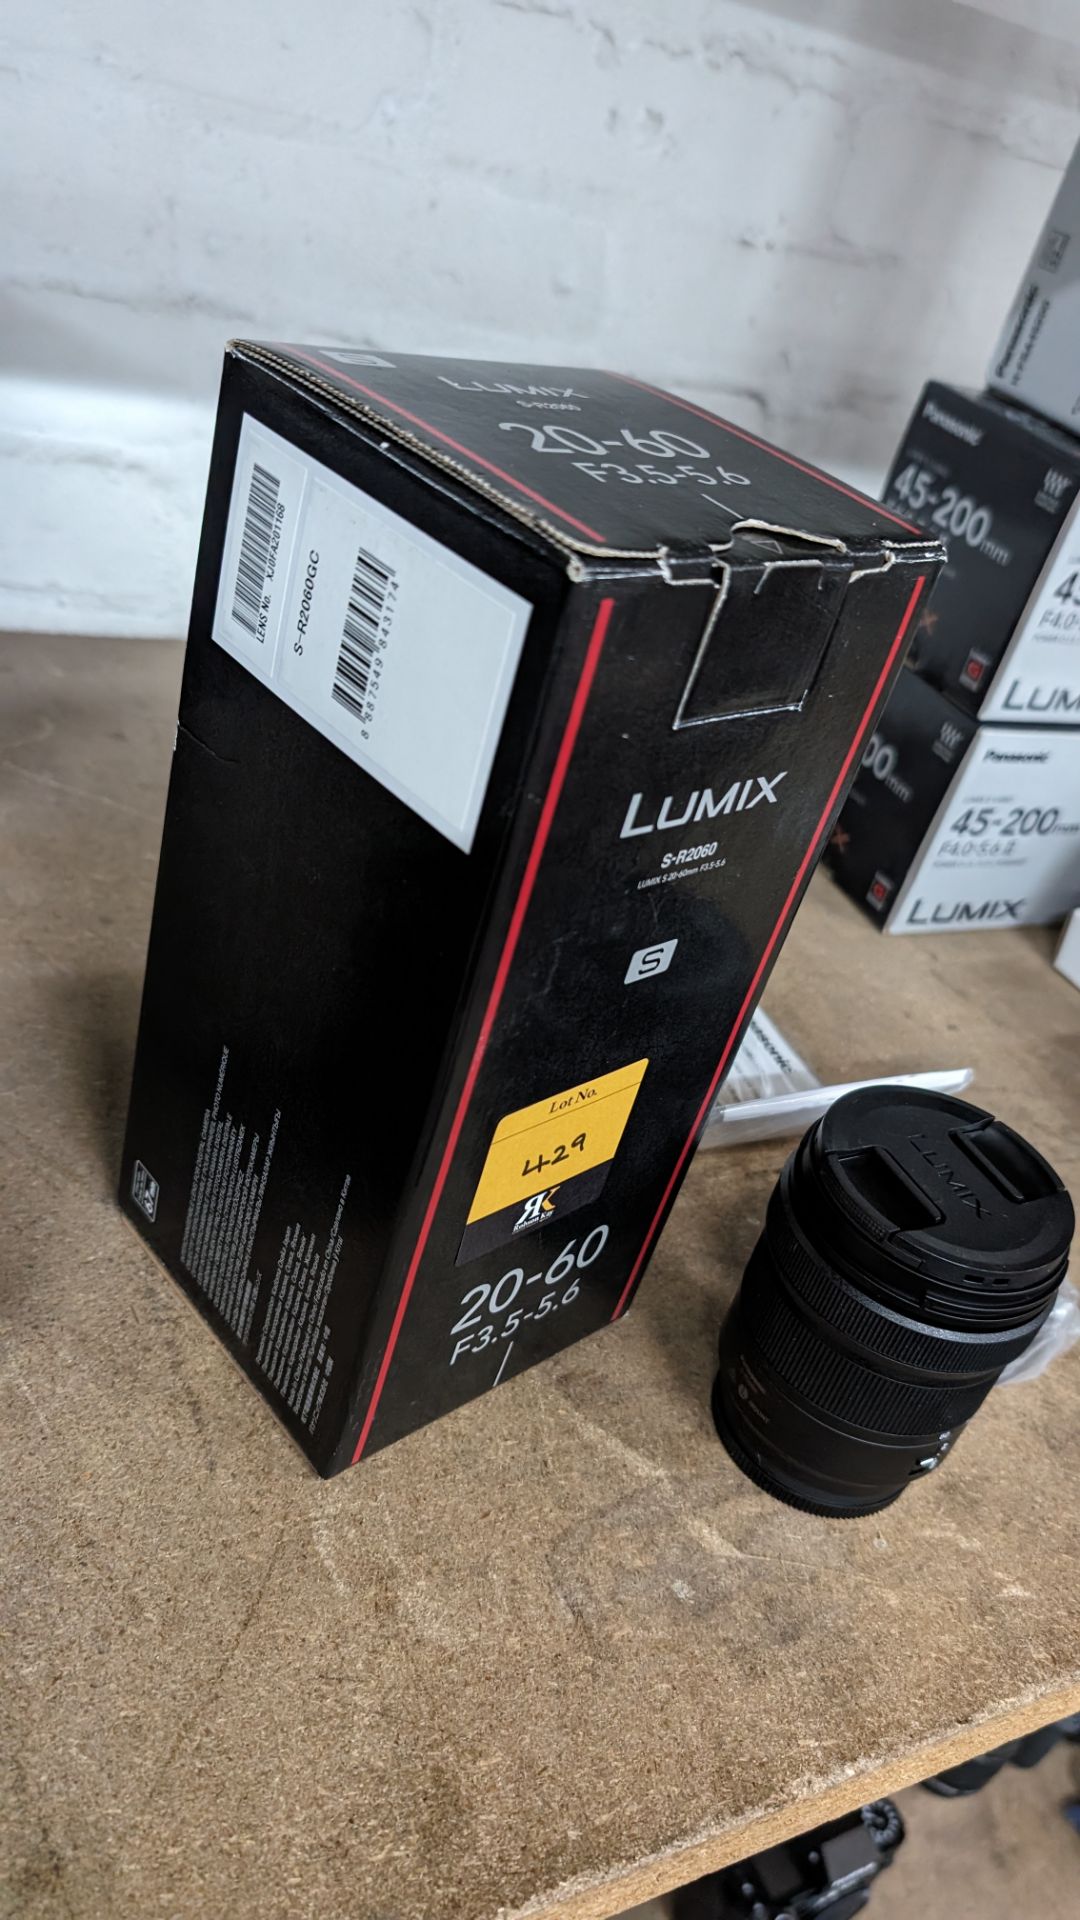 Panasonic Lumix model S-R2060 lens, 20-60mm, f3.5-5.6 - Image 14 of 14